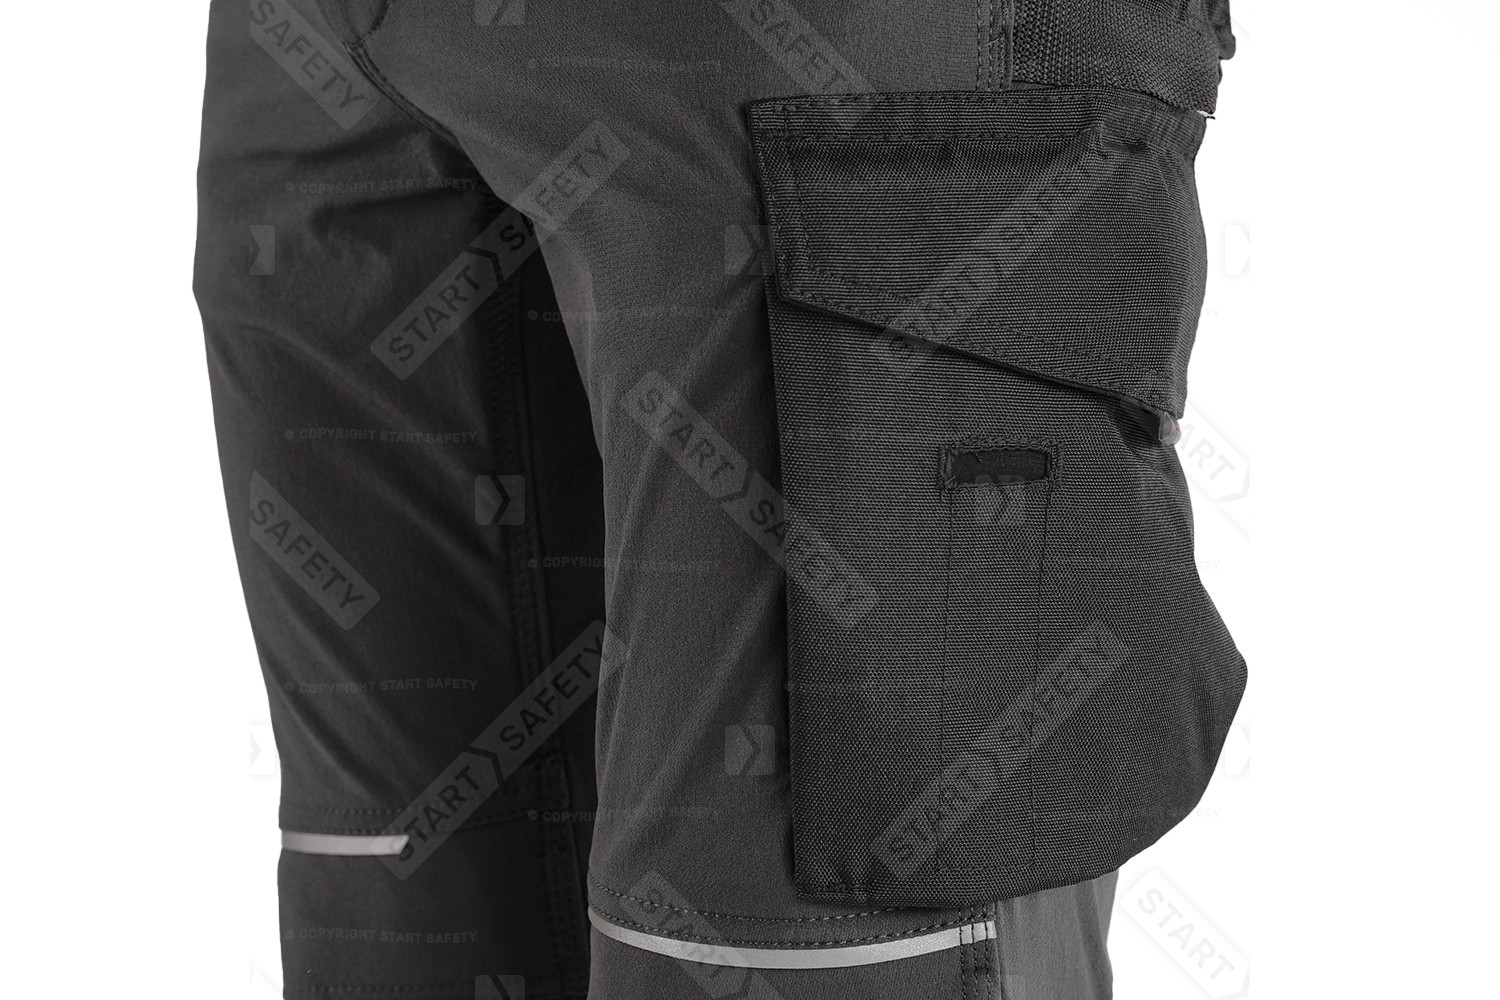 trouser thigh pocket